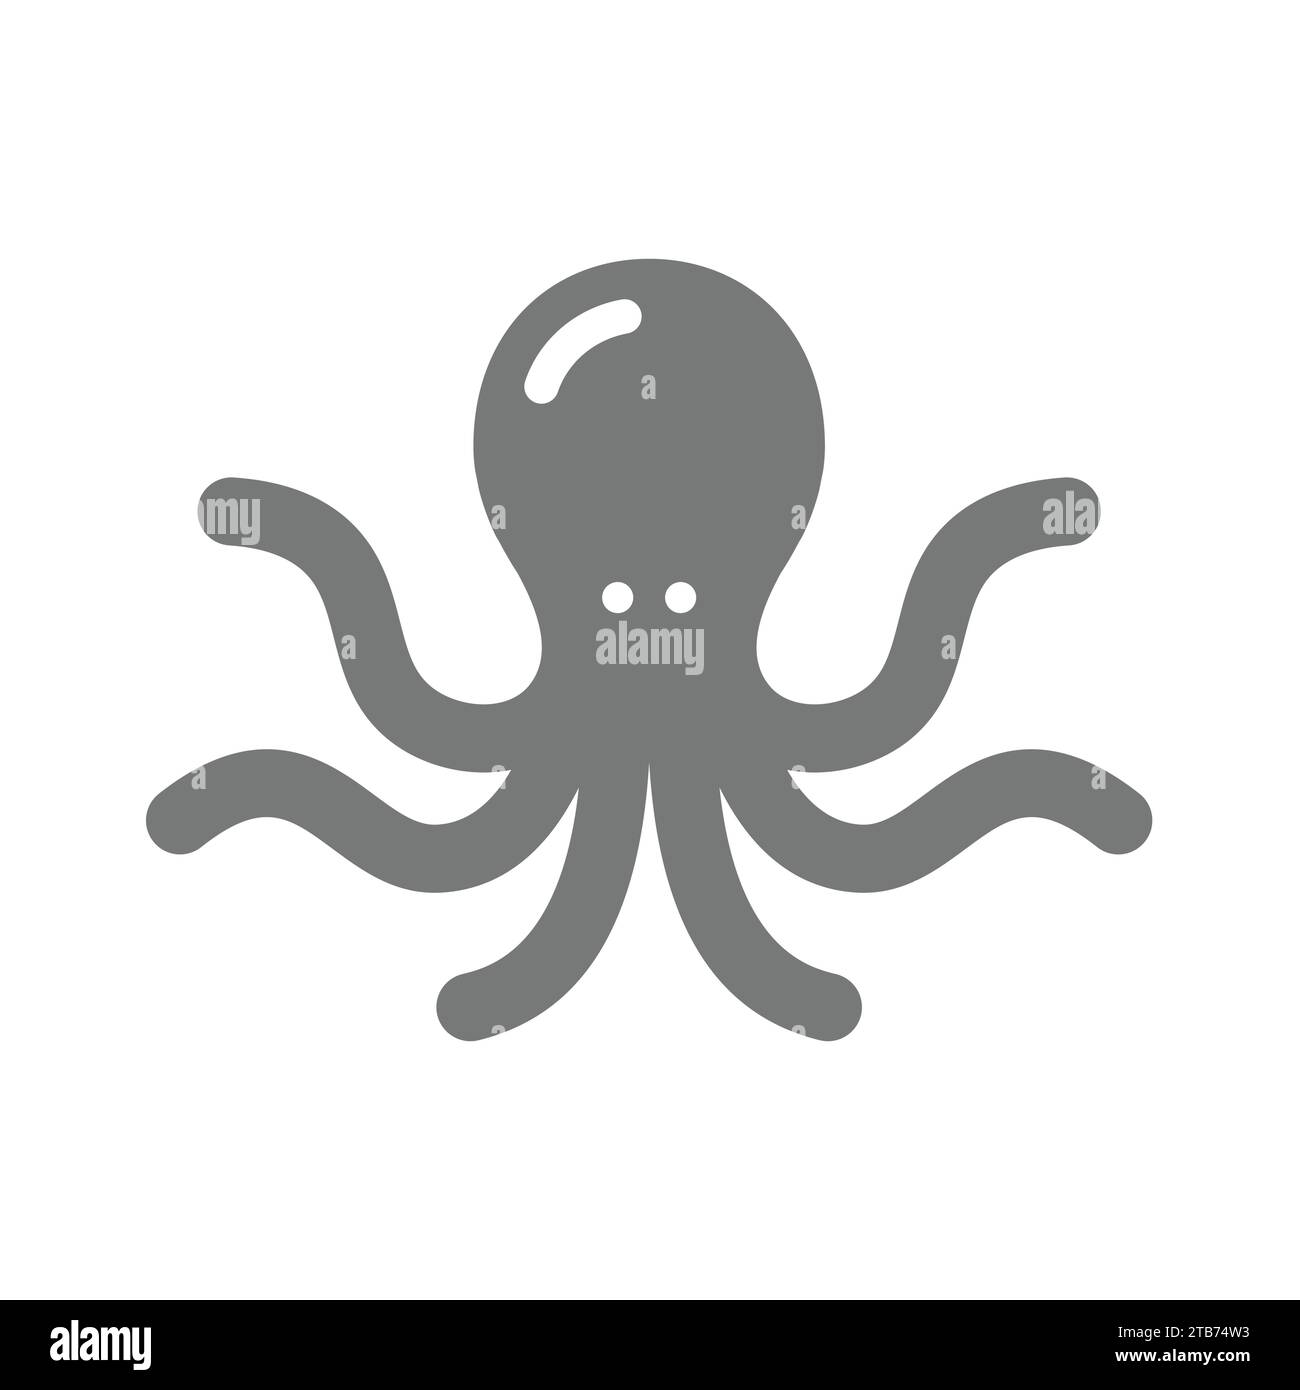 Oktopusvektorsymbol. Einfaches Meereslebewesen und Lebensmittelsymbol. Stock Vektor